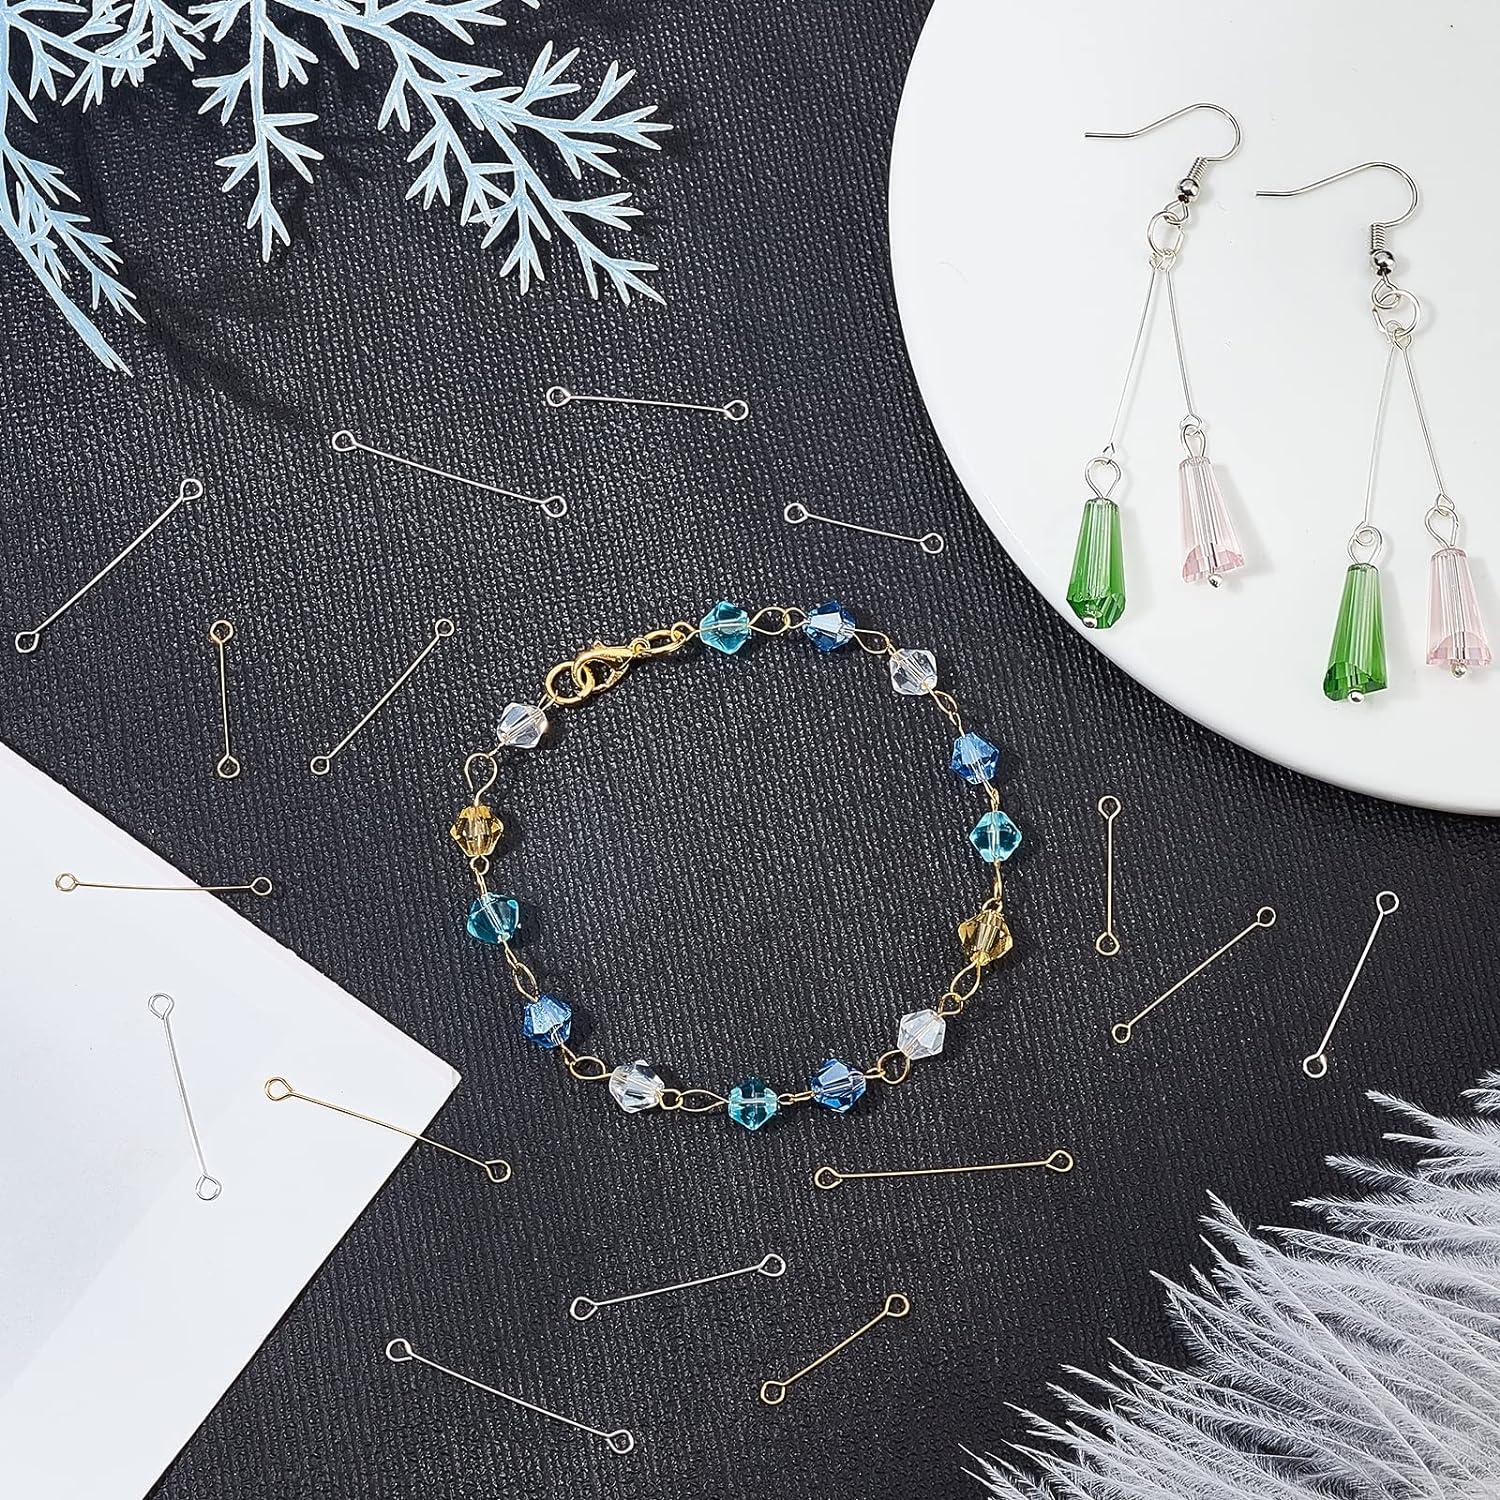 Turquoise Head Pins 1.5 Inch Enameled Swirl Headpins 20 Gauge Fancy Jewelry  Supplies Artisan Supplies Top Spiral Eye Pins Artisan 